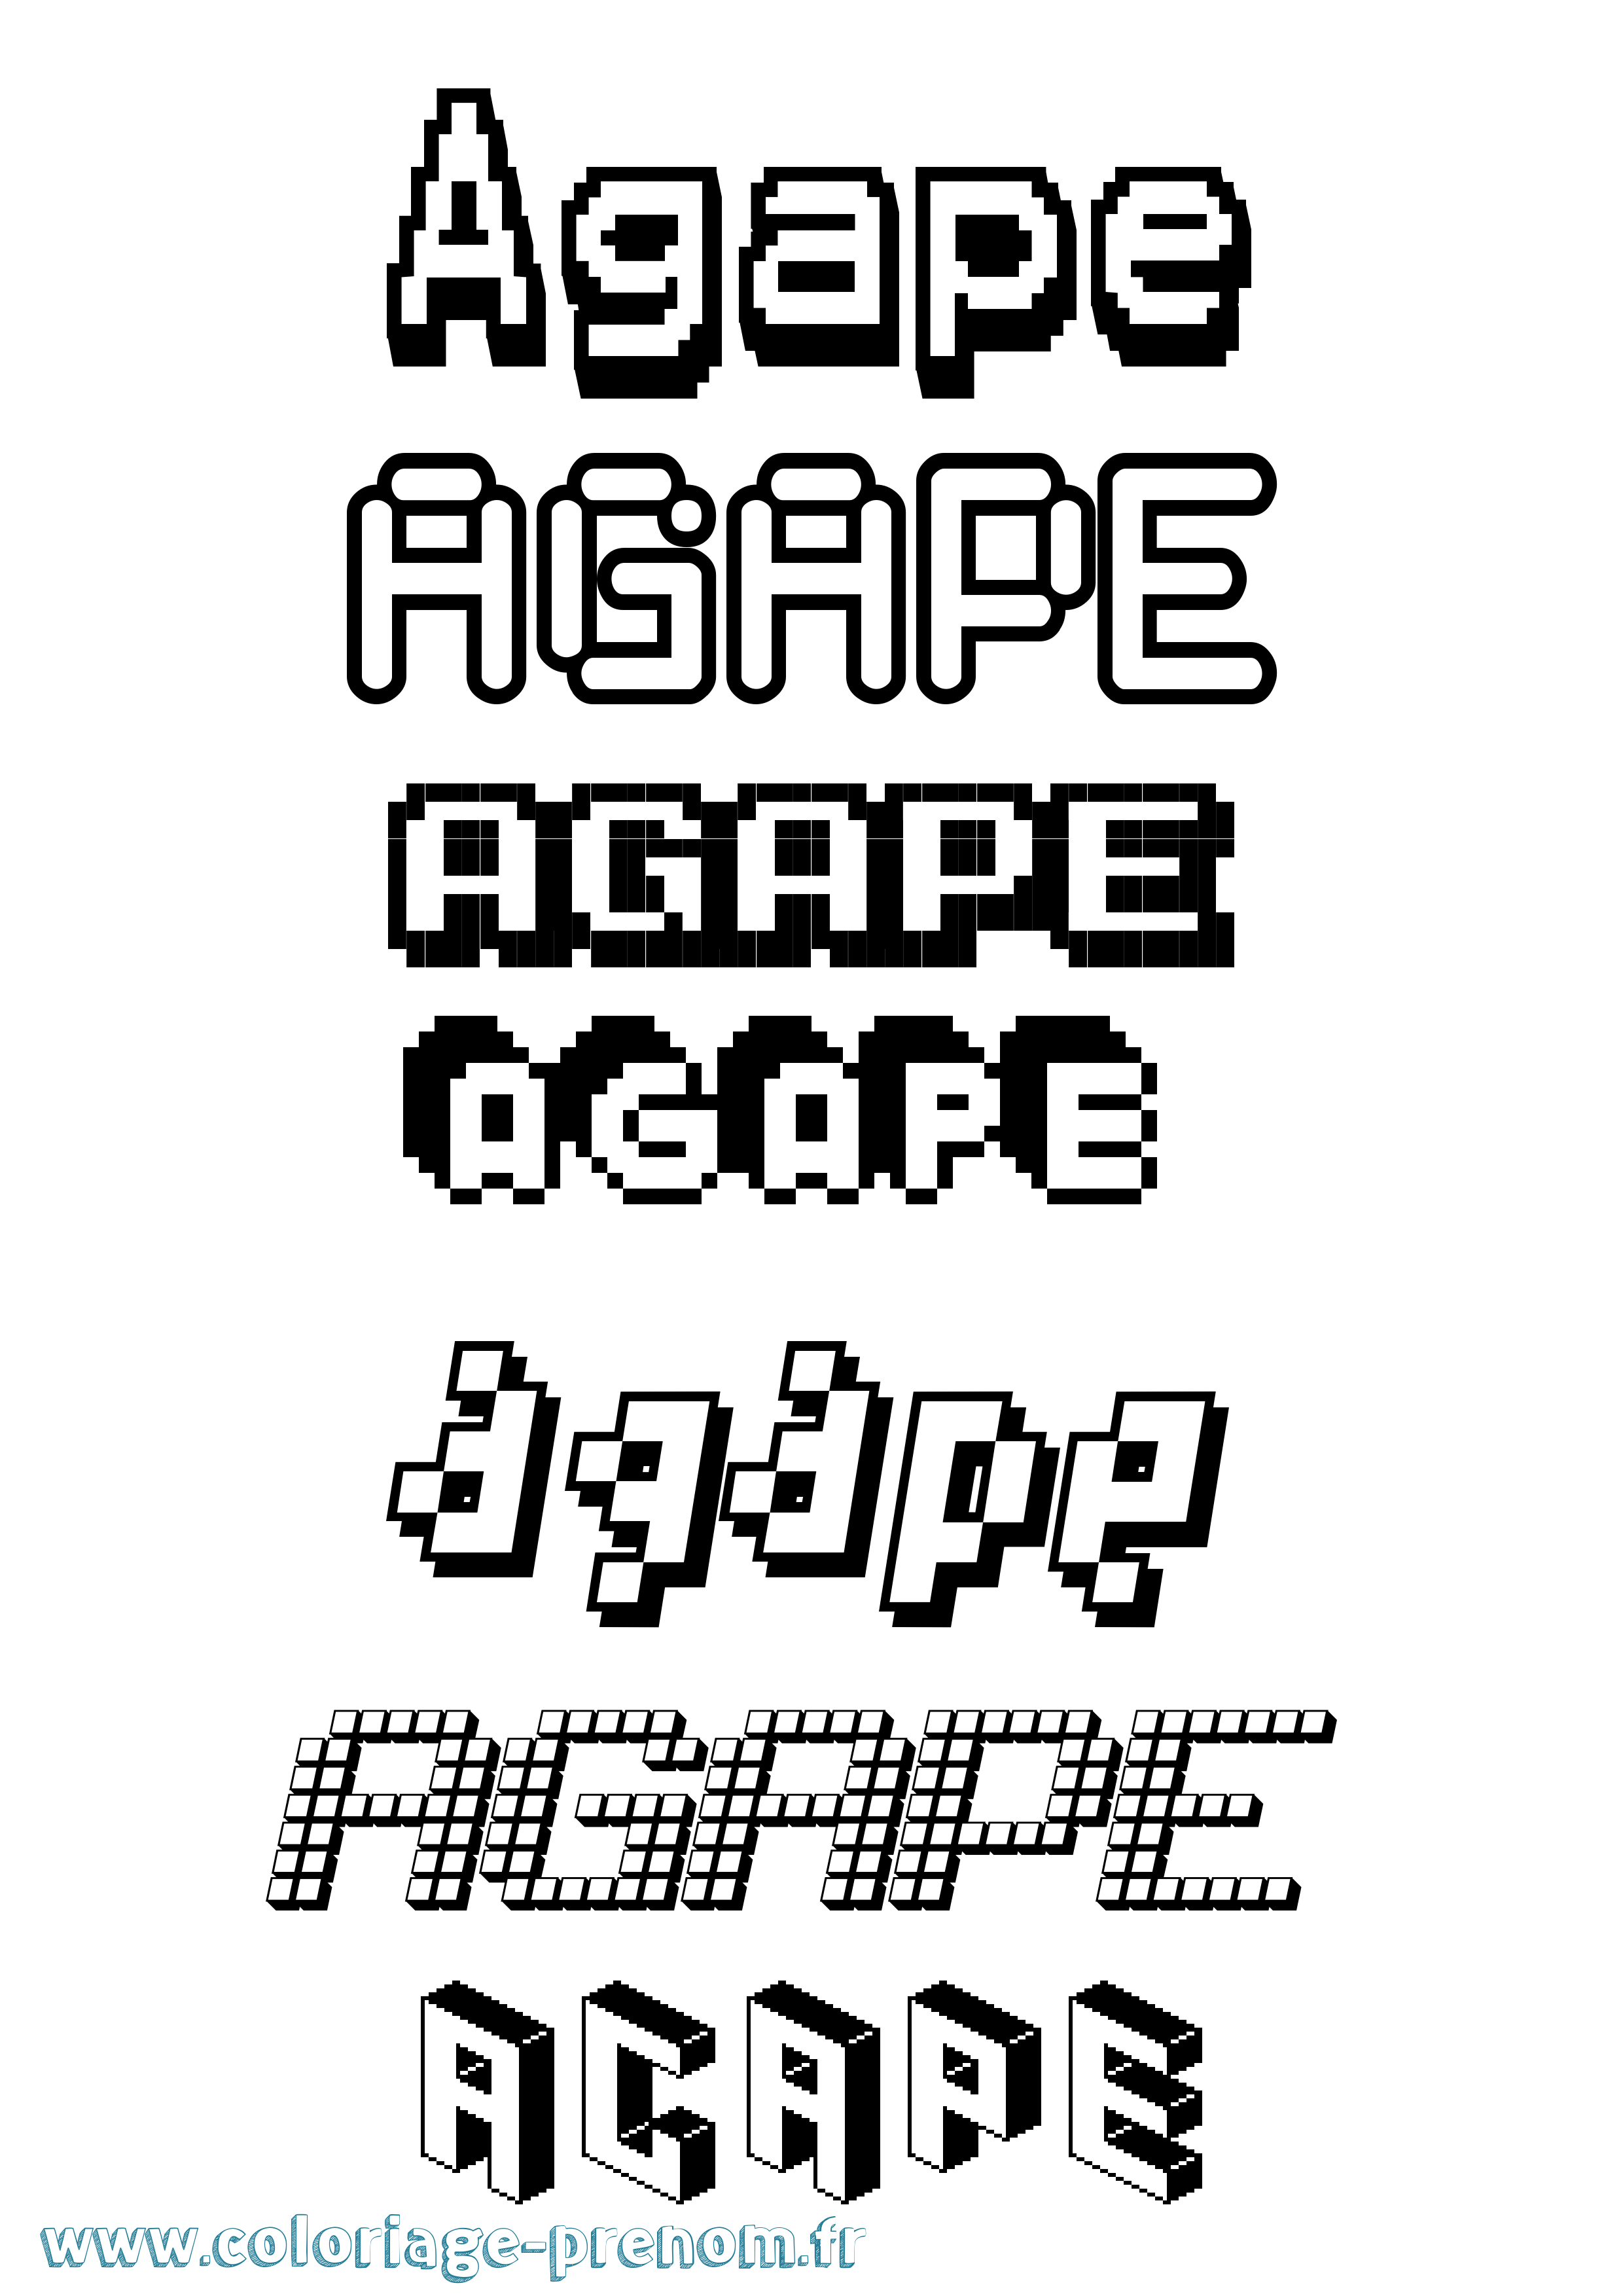 Coloriage prénom Agape Pixel